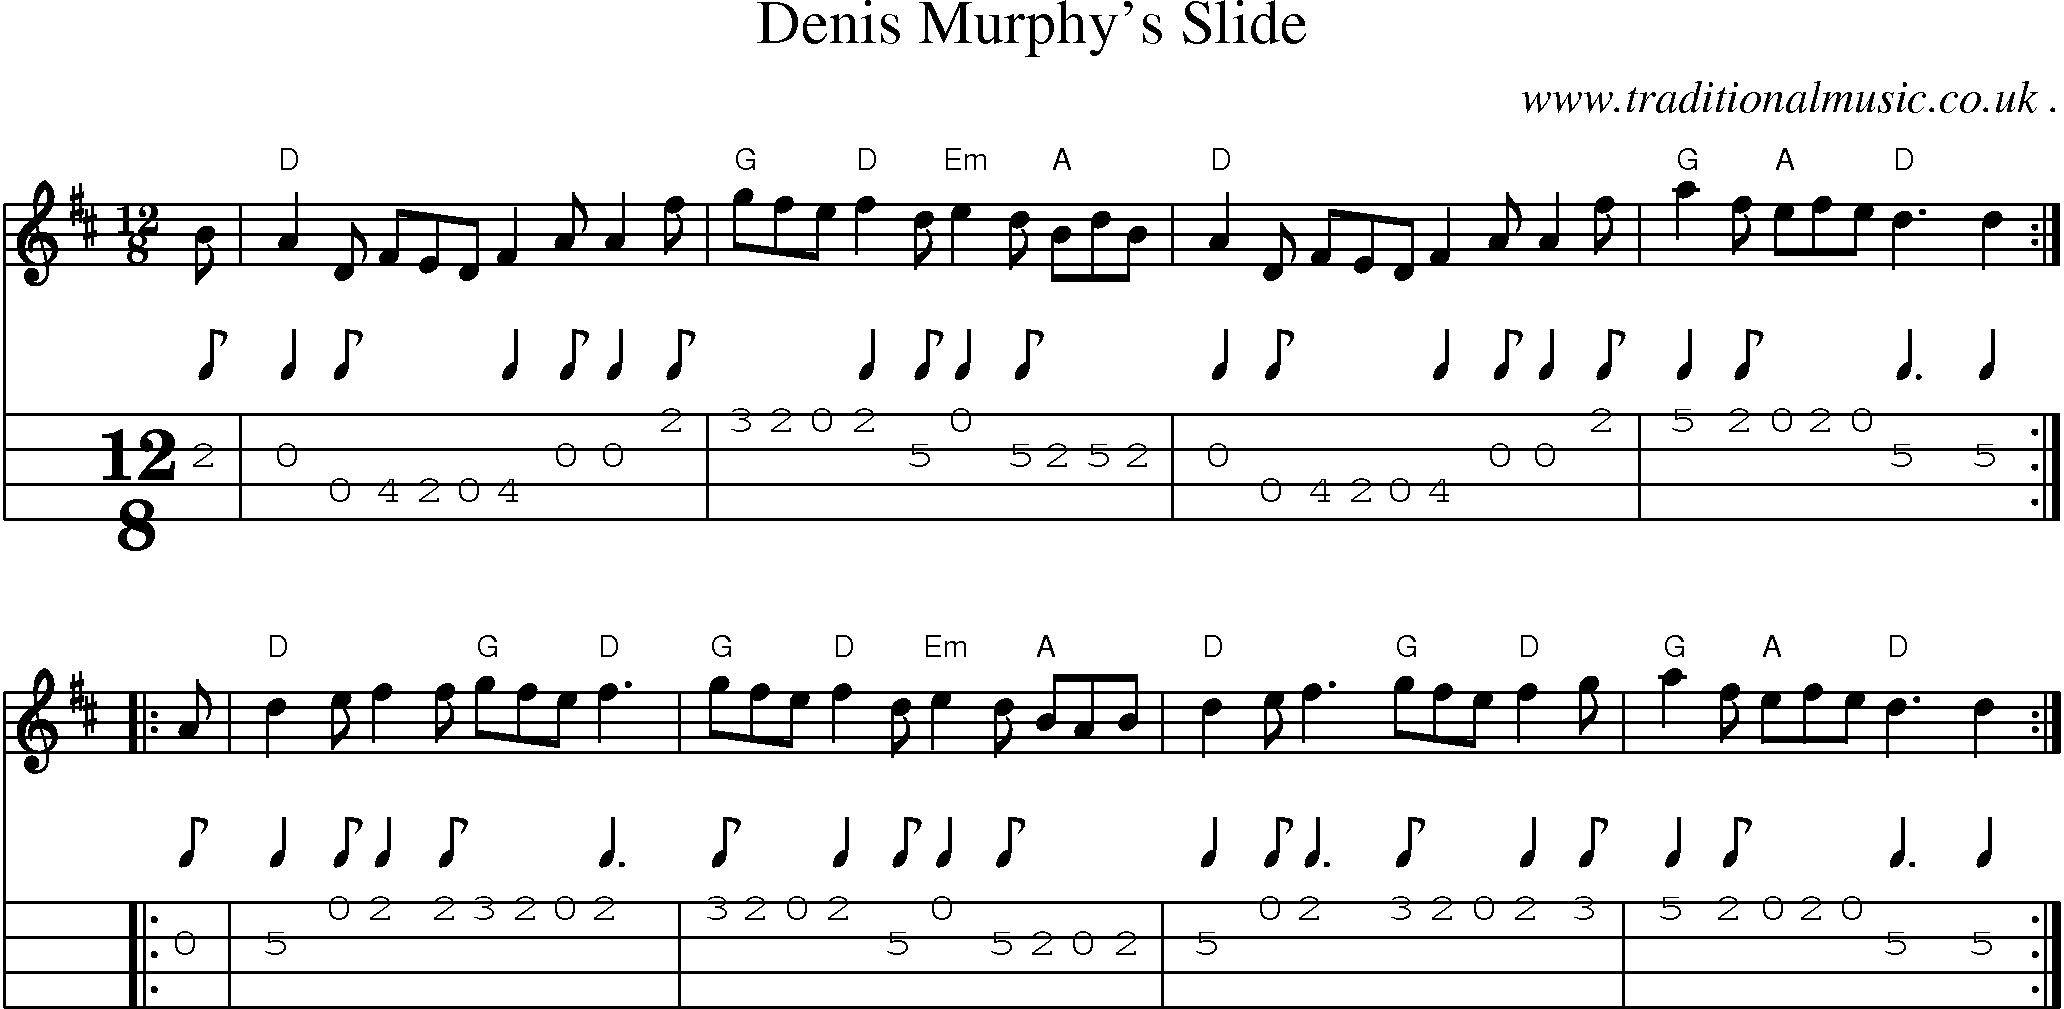 Music Score and Guitar Tabs for Denis Murphys Slide